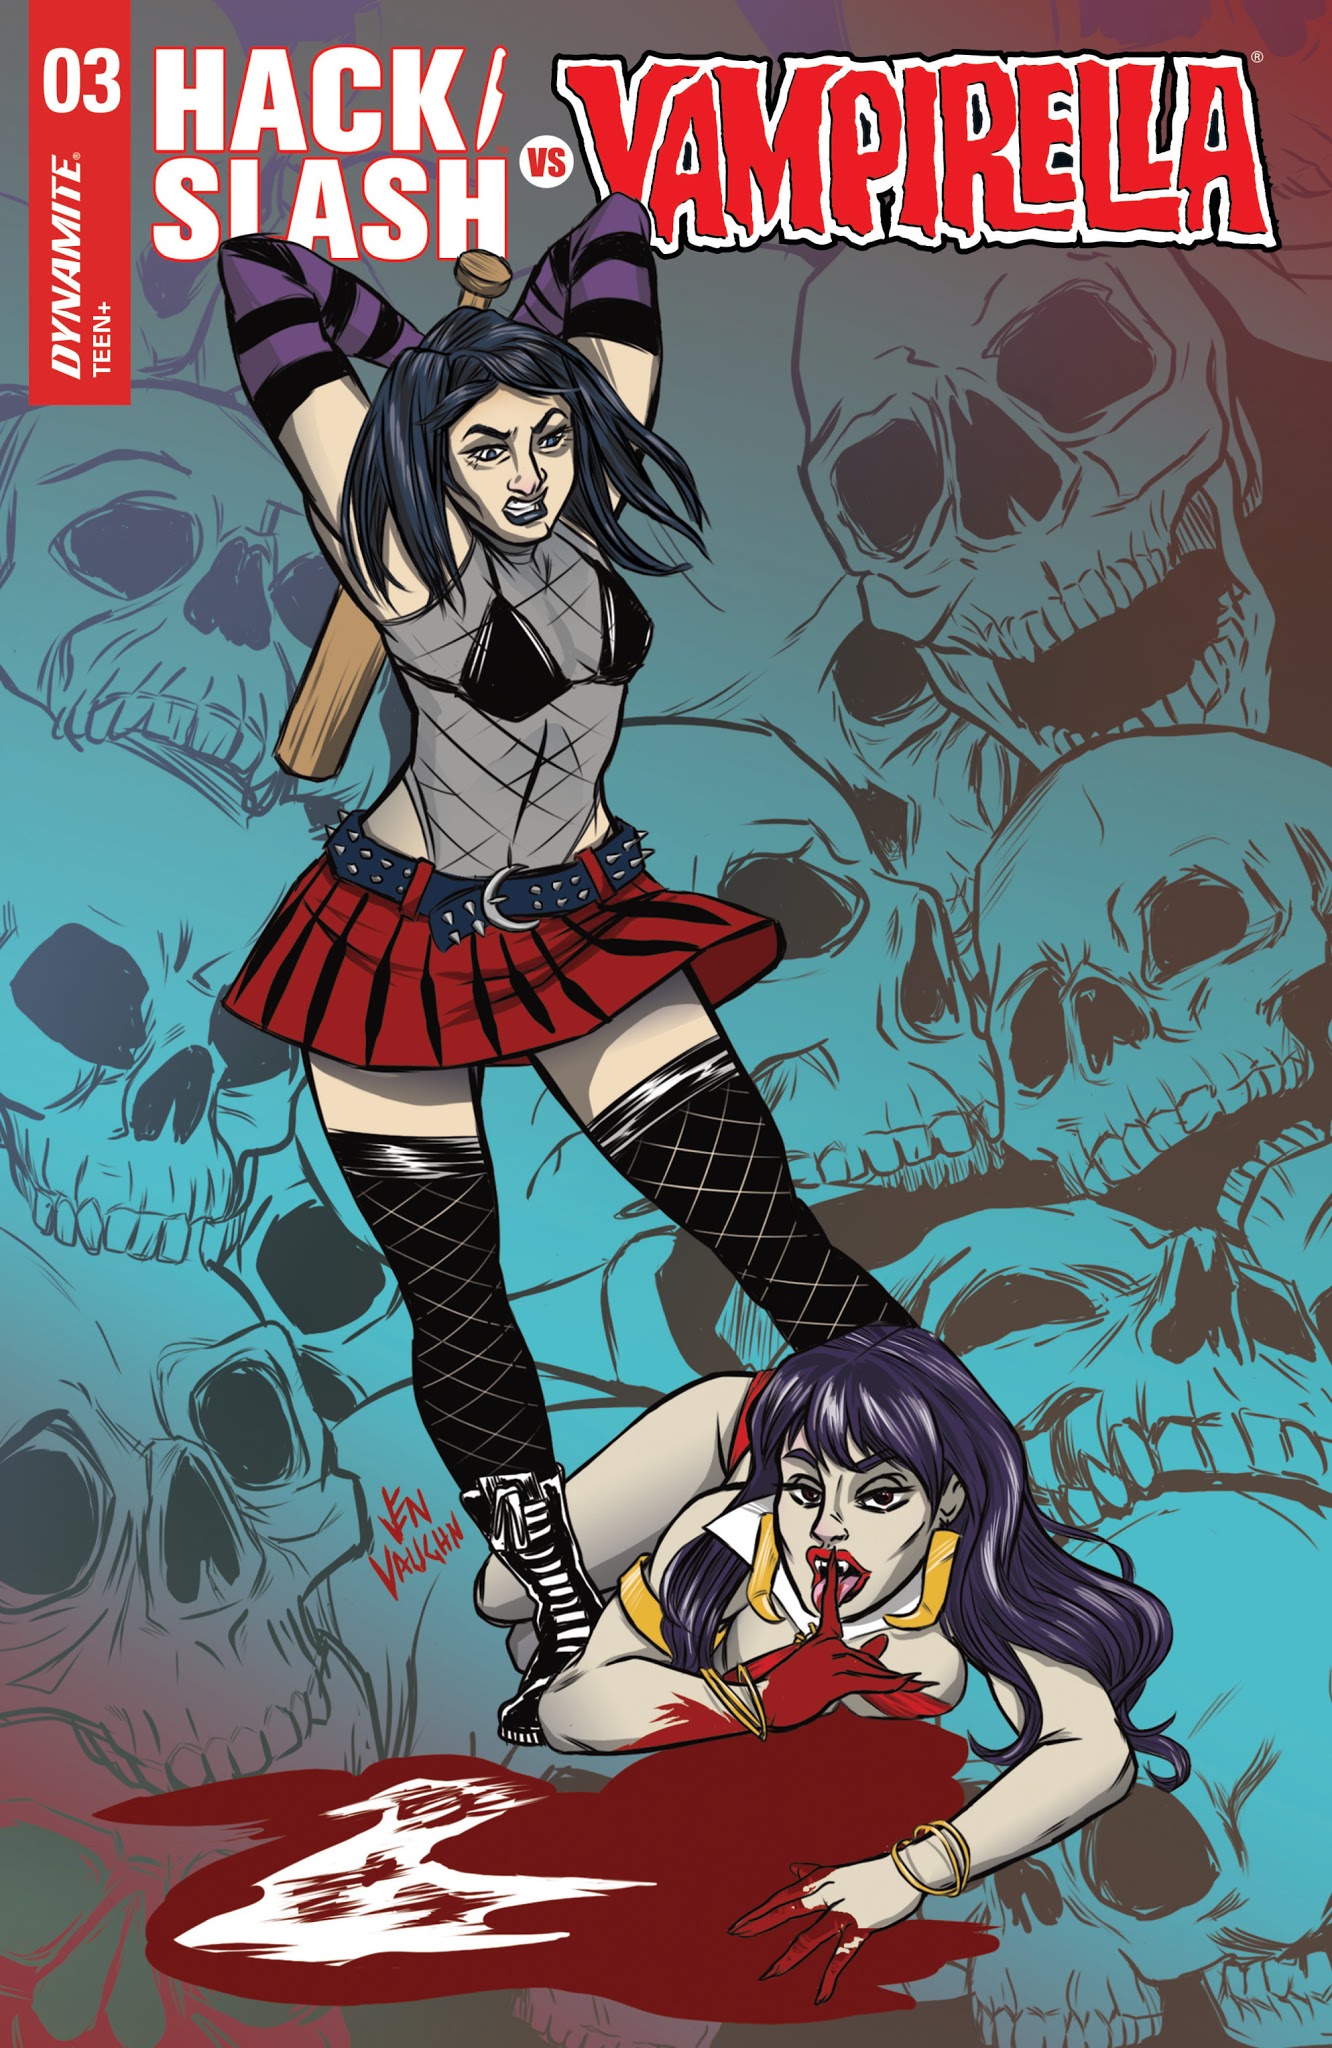 Read online Hack/Slash vs. Vampirella comic -  Issue #3 - 1